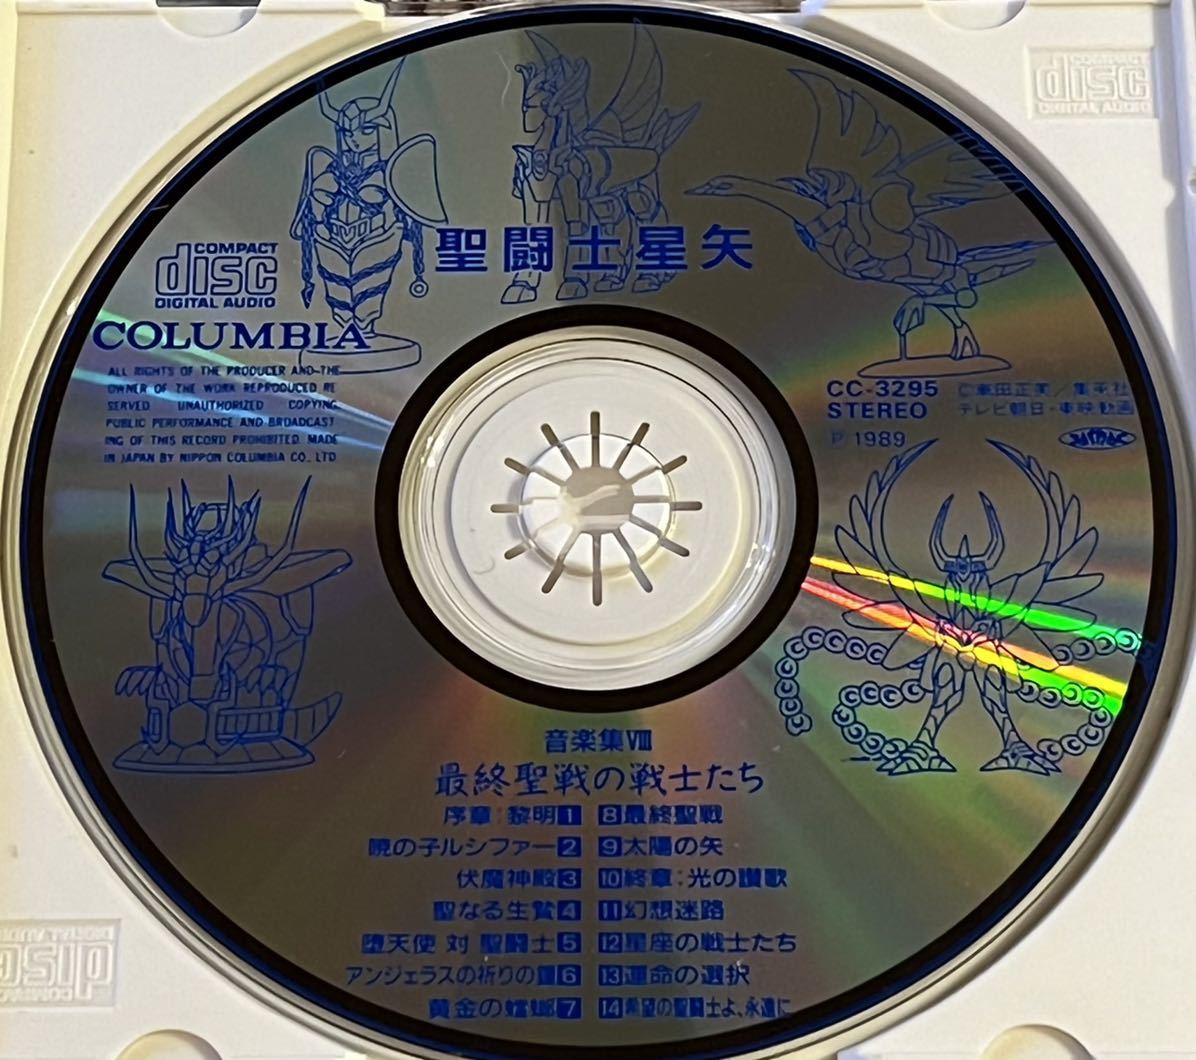 *CD Saint Seiya music compilation Ⅷ 8 last . war. warrior .. original * soundtrack - obi attaching CC-3295 width mountain .. car rice field regular beautiful *